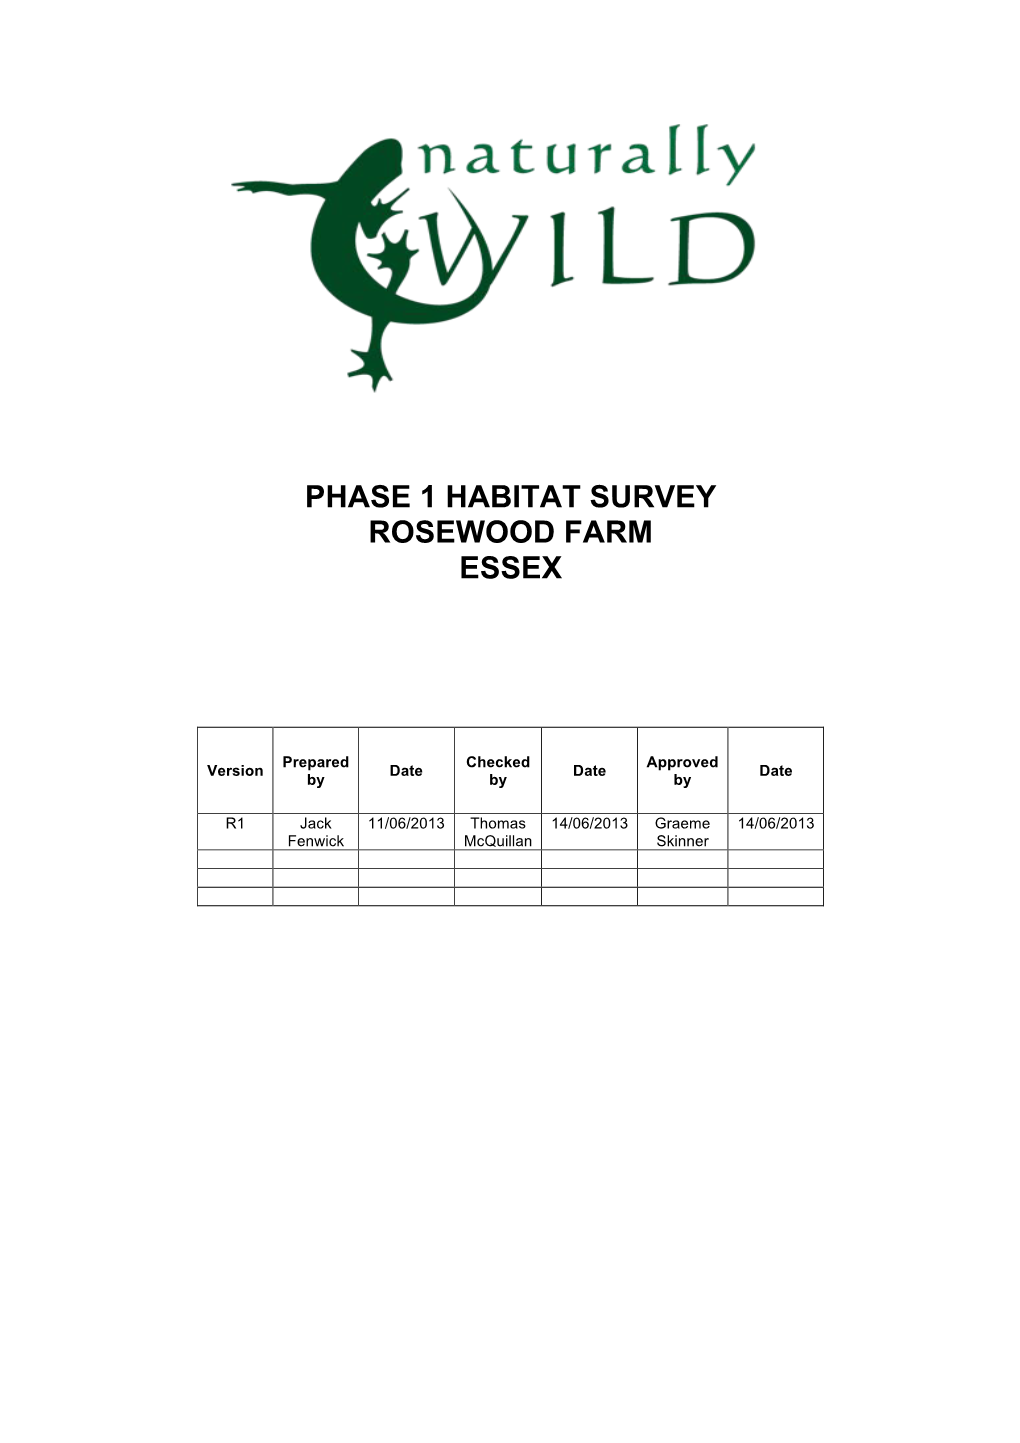 Phase 1 Habitat Survey Rosewood Farm Essex